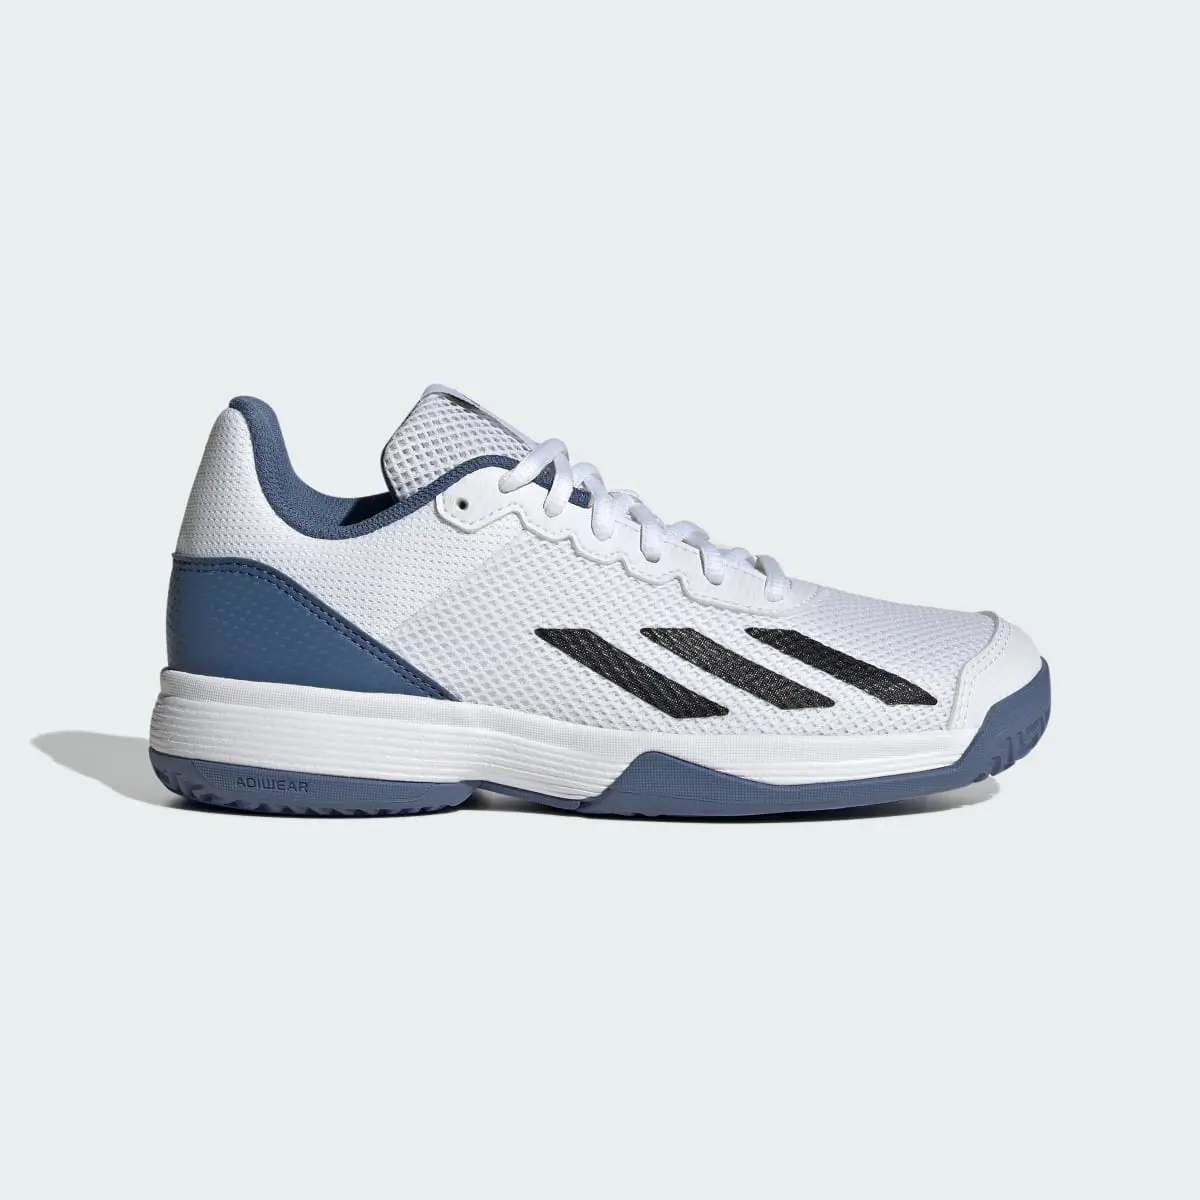 Adidas Courtflash Tenis Ayakkabısı. 2